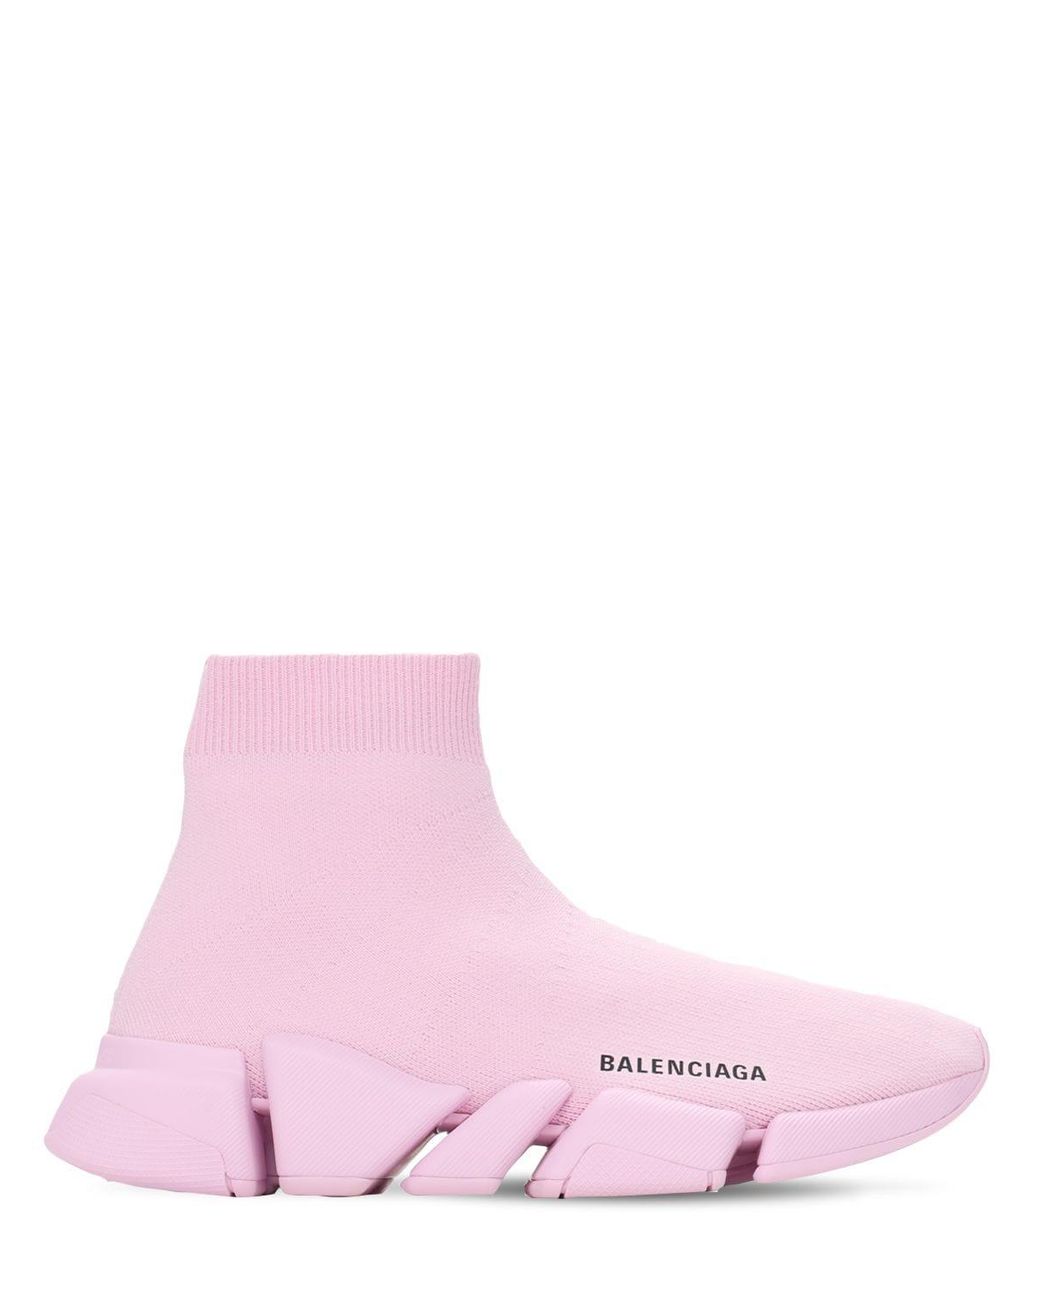 Balenciaga 30mm Speed 2.0 Lt Knit Sneakers in Pink - Lyst